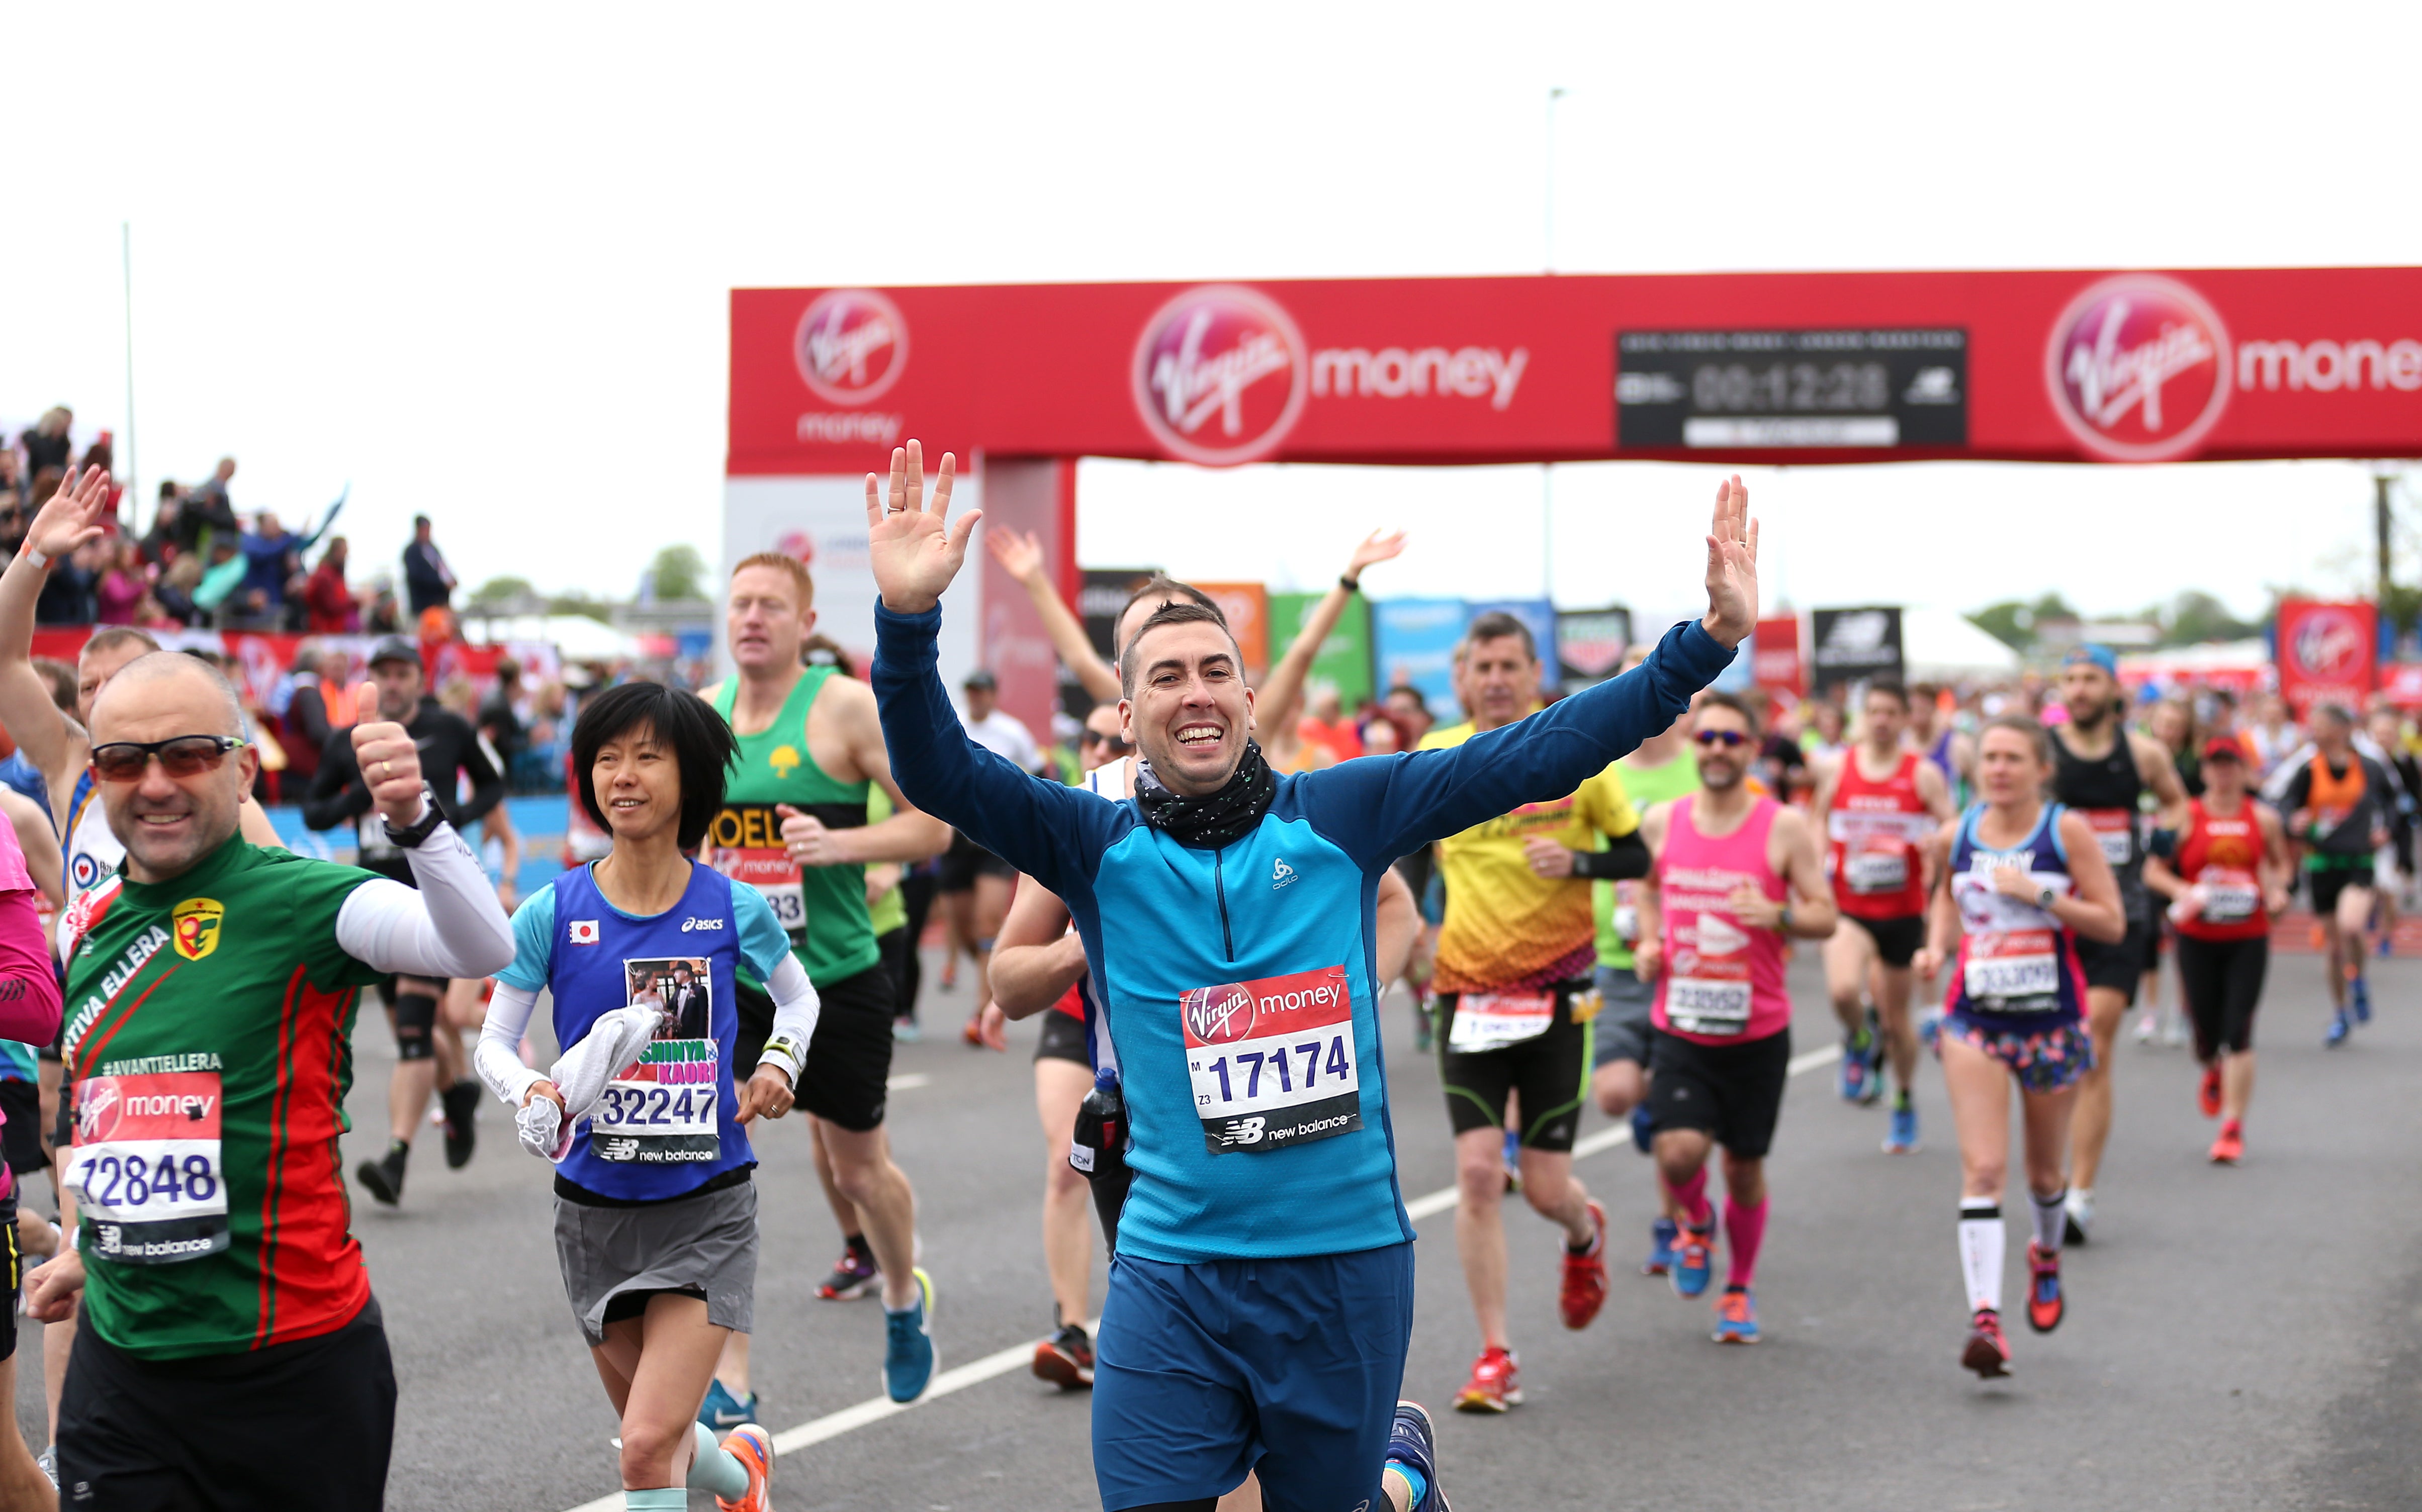 Some 40,000 runners will take part in Sunday’s Virgin Money London Marathon